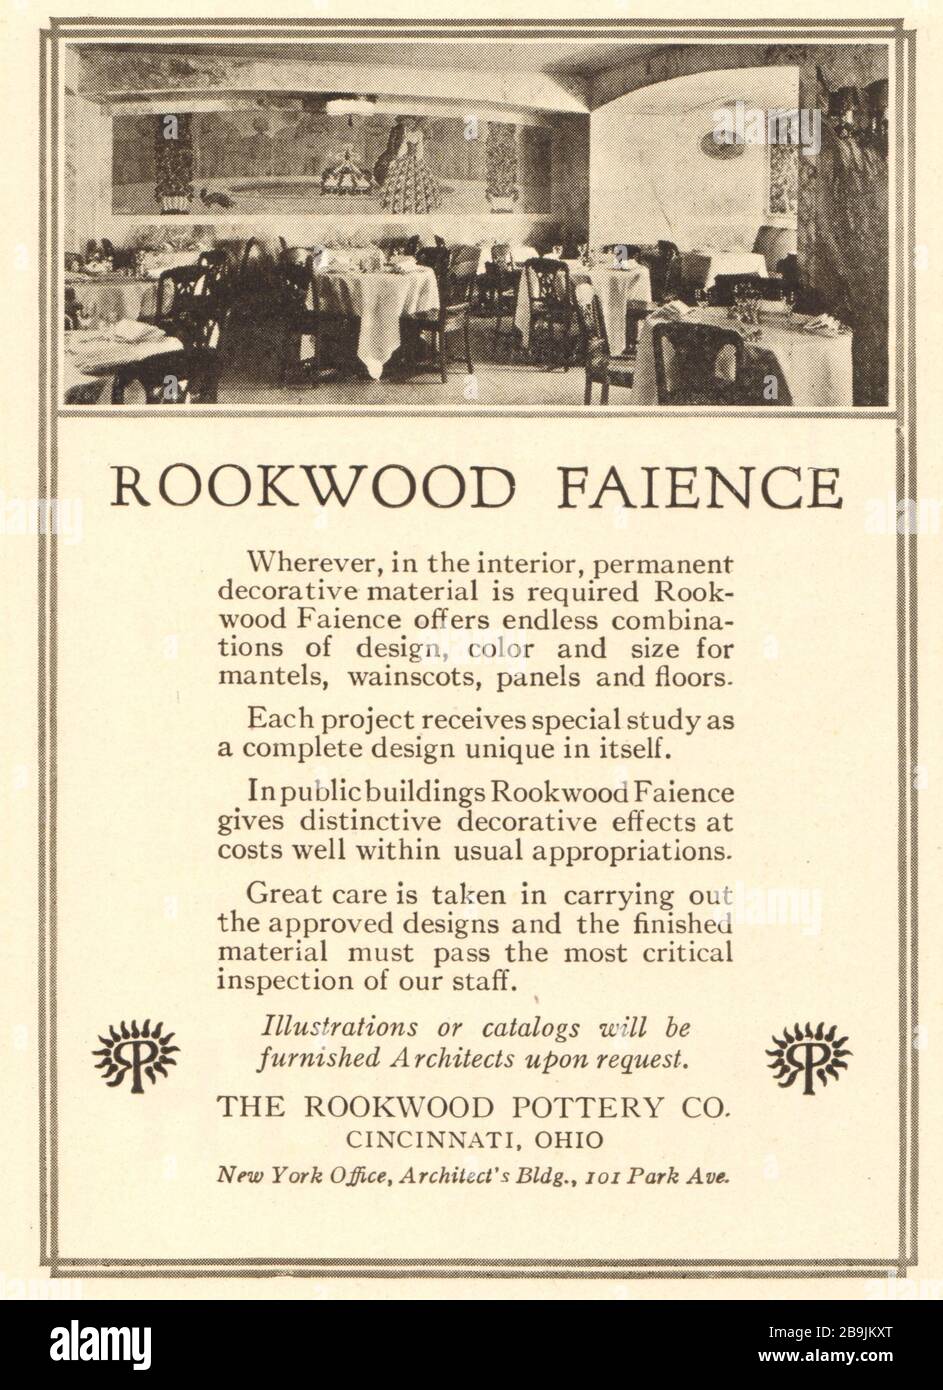 Rookwood Faience. The Rookwood pottery Co., Cincinnati, Ohio (1919) Stock Photo